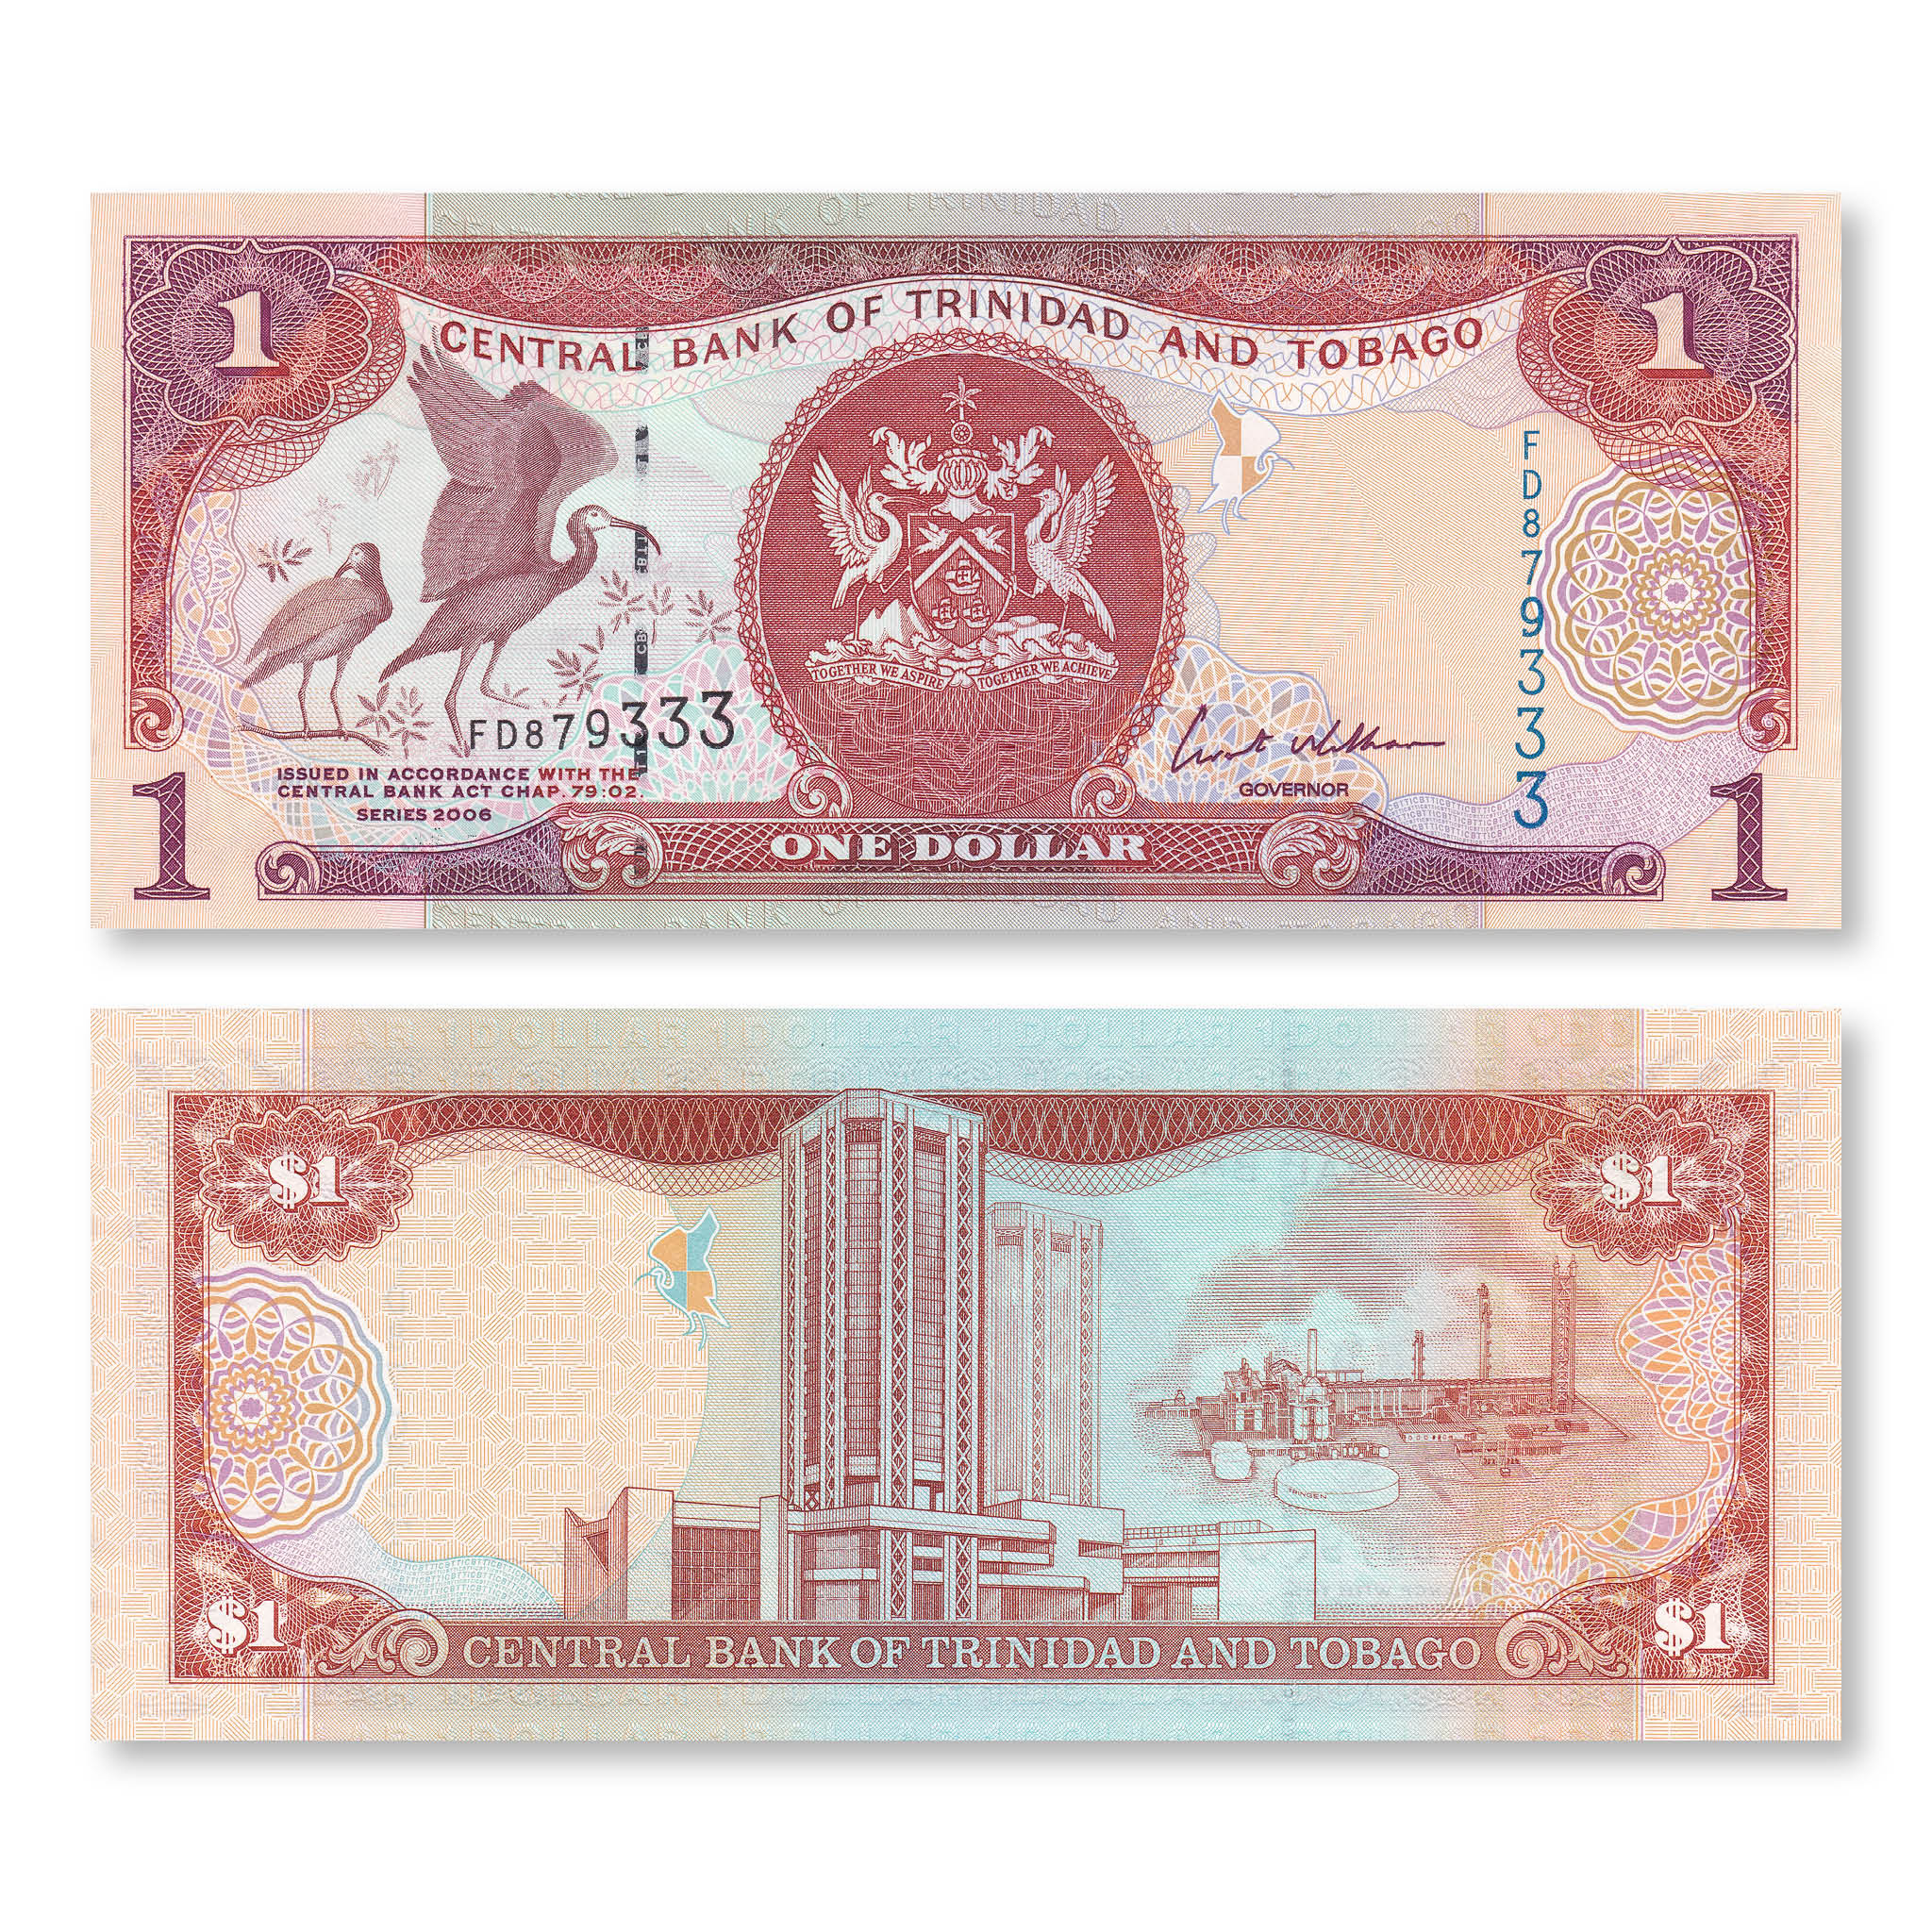 Trinidad & Tobago 1 Dollar, 2006, B221a, P46, UNC - Robert's World Money - World Banknotes